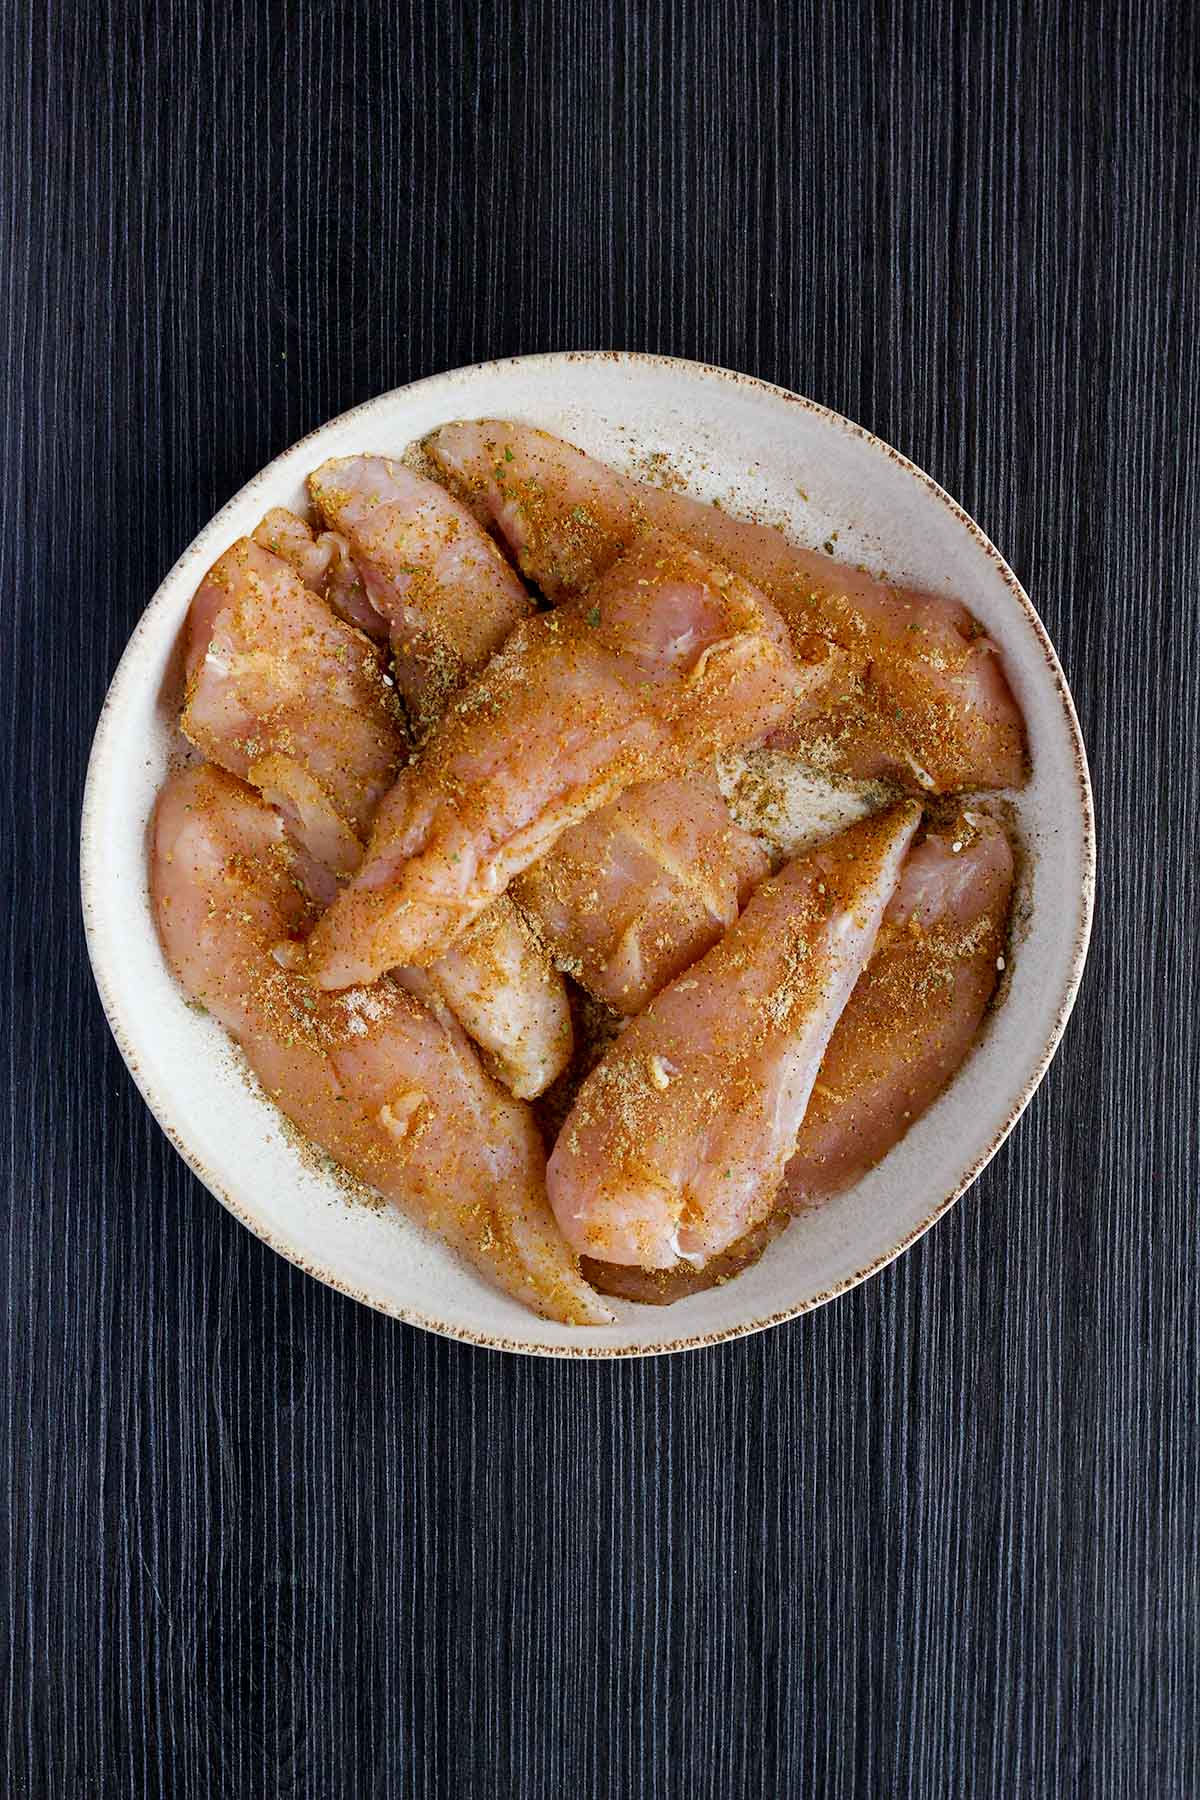 Seasoned raw chicken in a bowl.